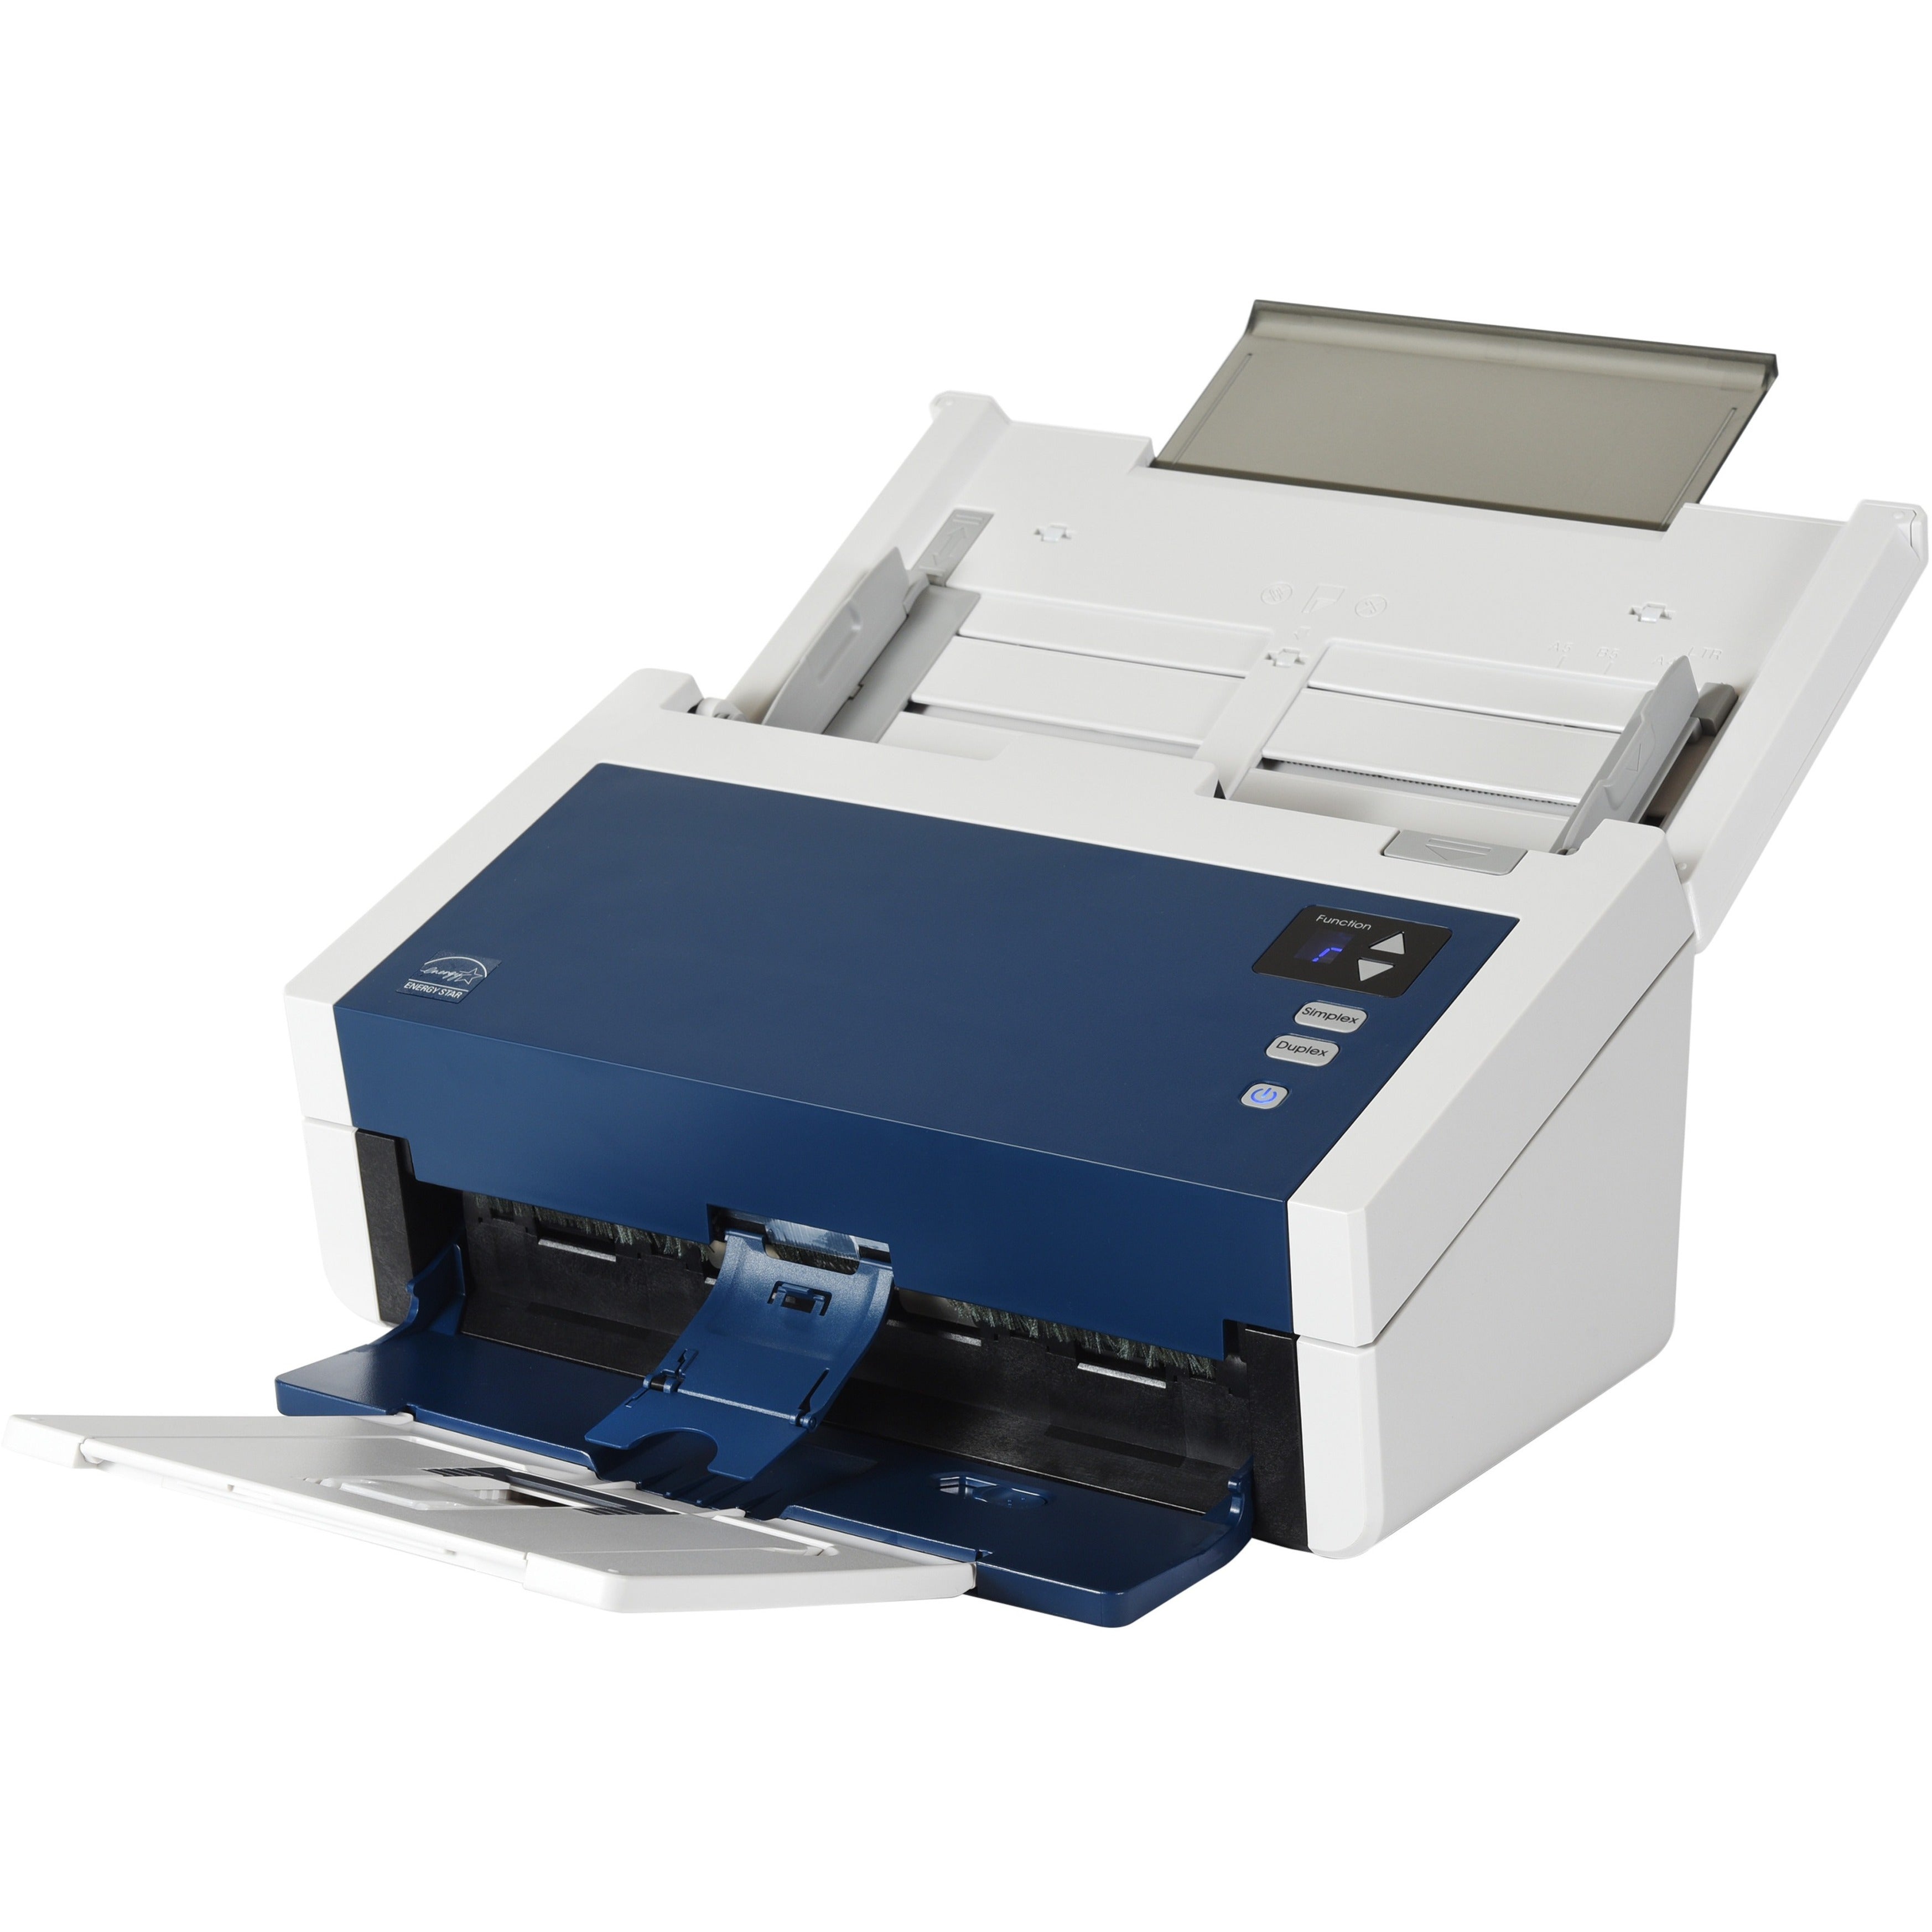 Xerox XDM6440-U DocuMate 6440 Sheetfed Scanner - High-Speed, Duplex Scanning, 600 dpi Optical